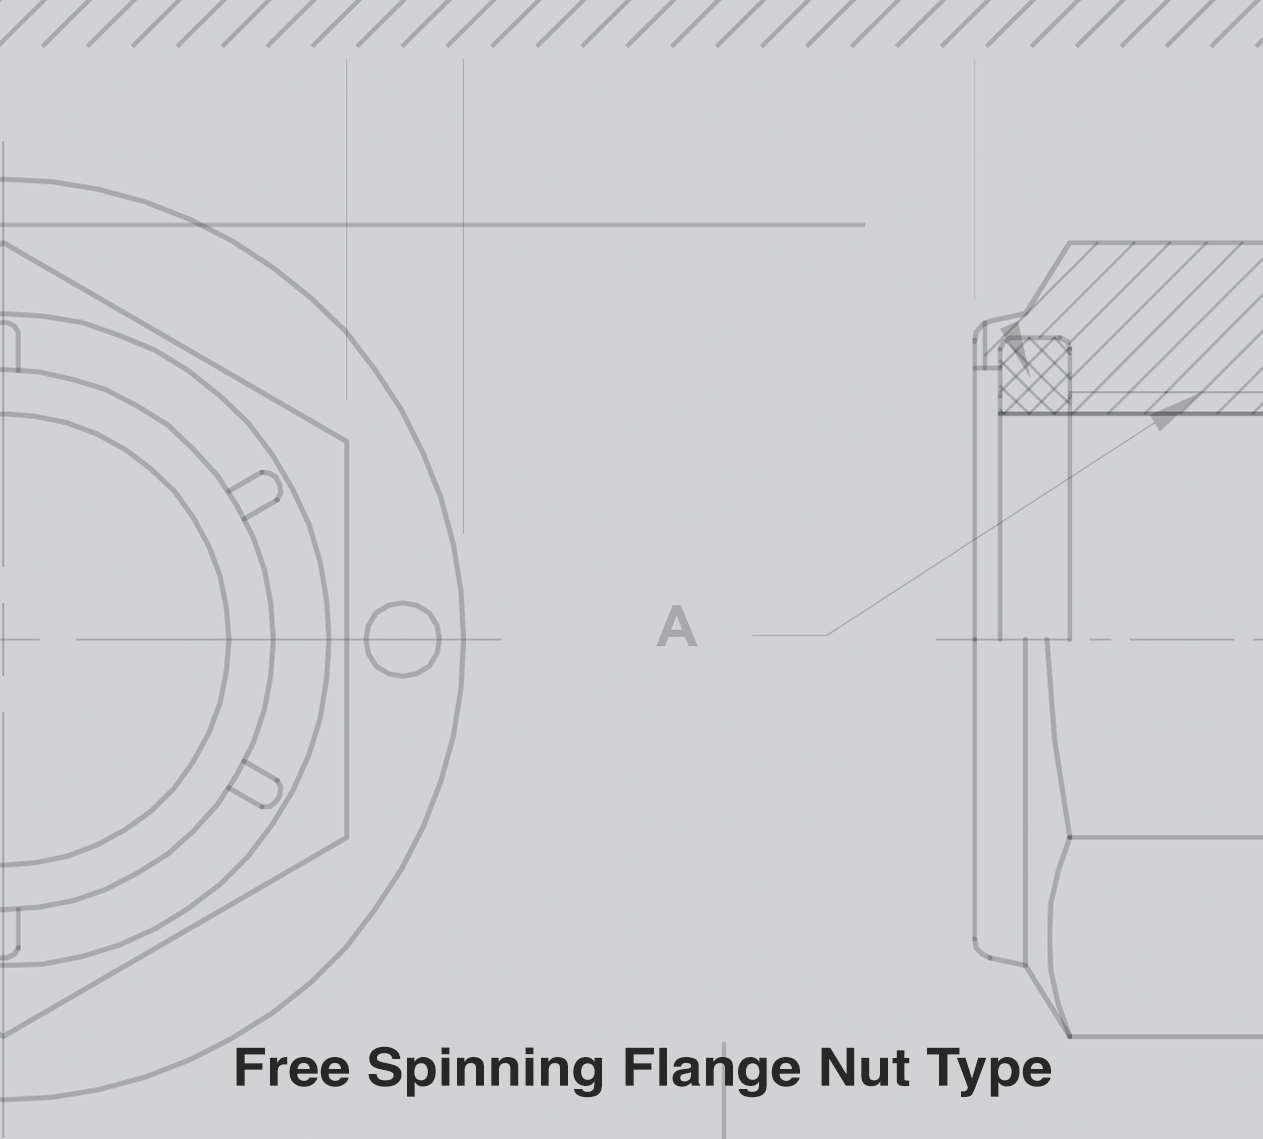 Free-Spinning-Flange-Nut-Type